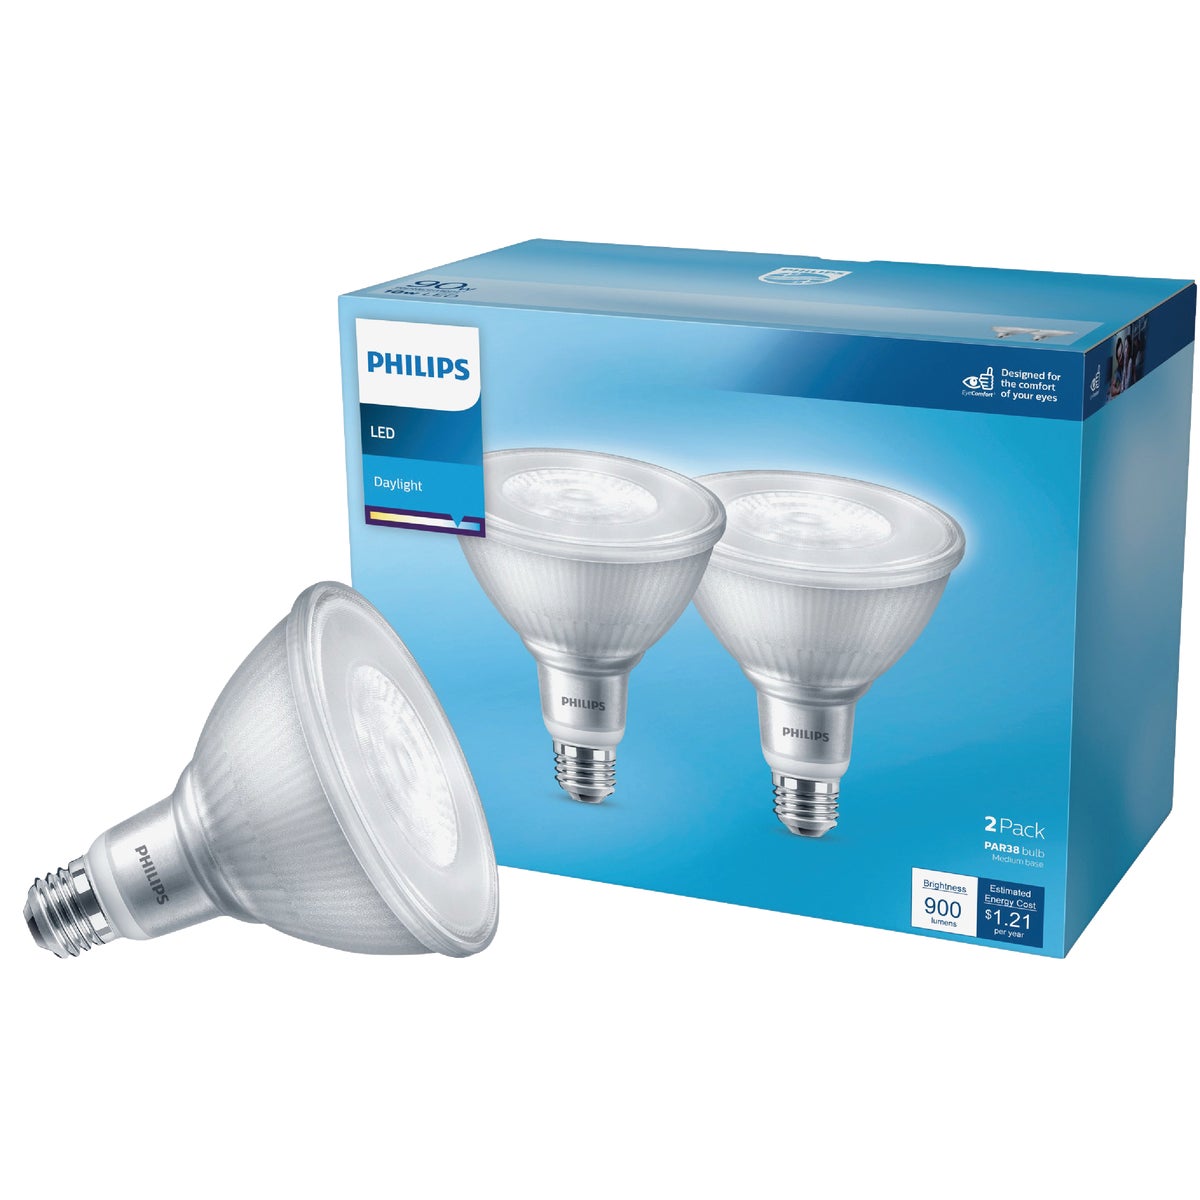 Philips 573220 Philips 90W Equivalent Daylight PAR38 Medium LED Floodlight Light Bulb (2-Pack) 573220